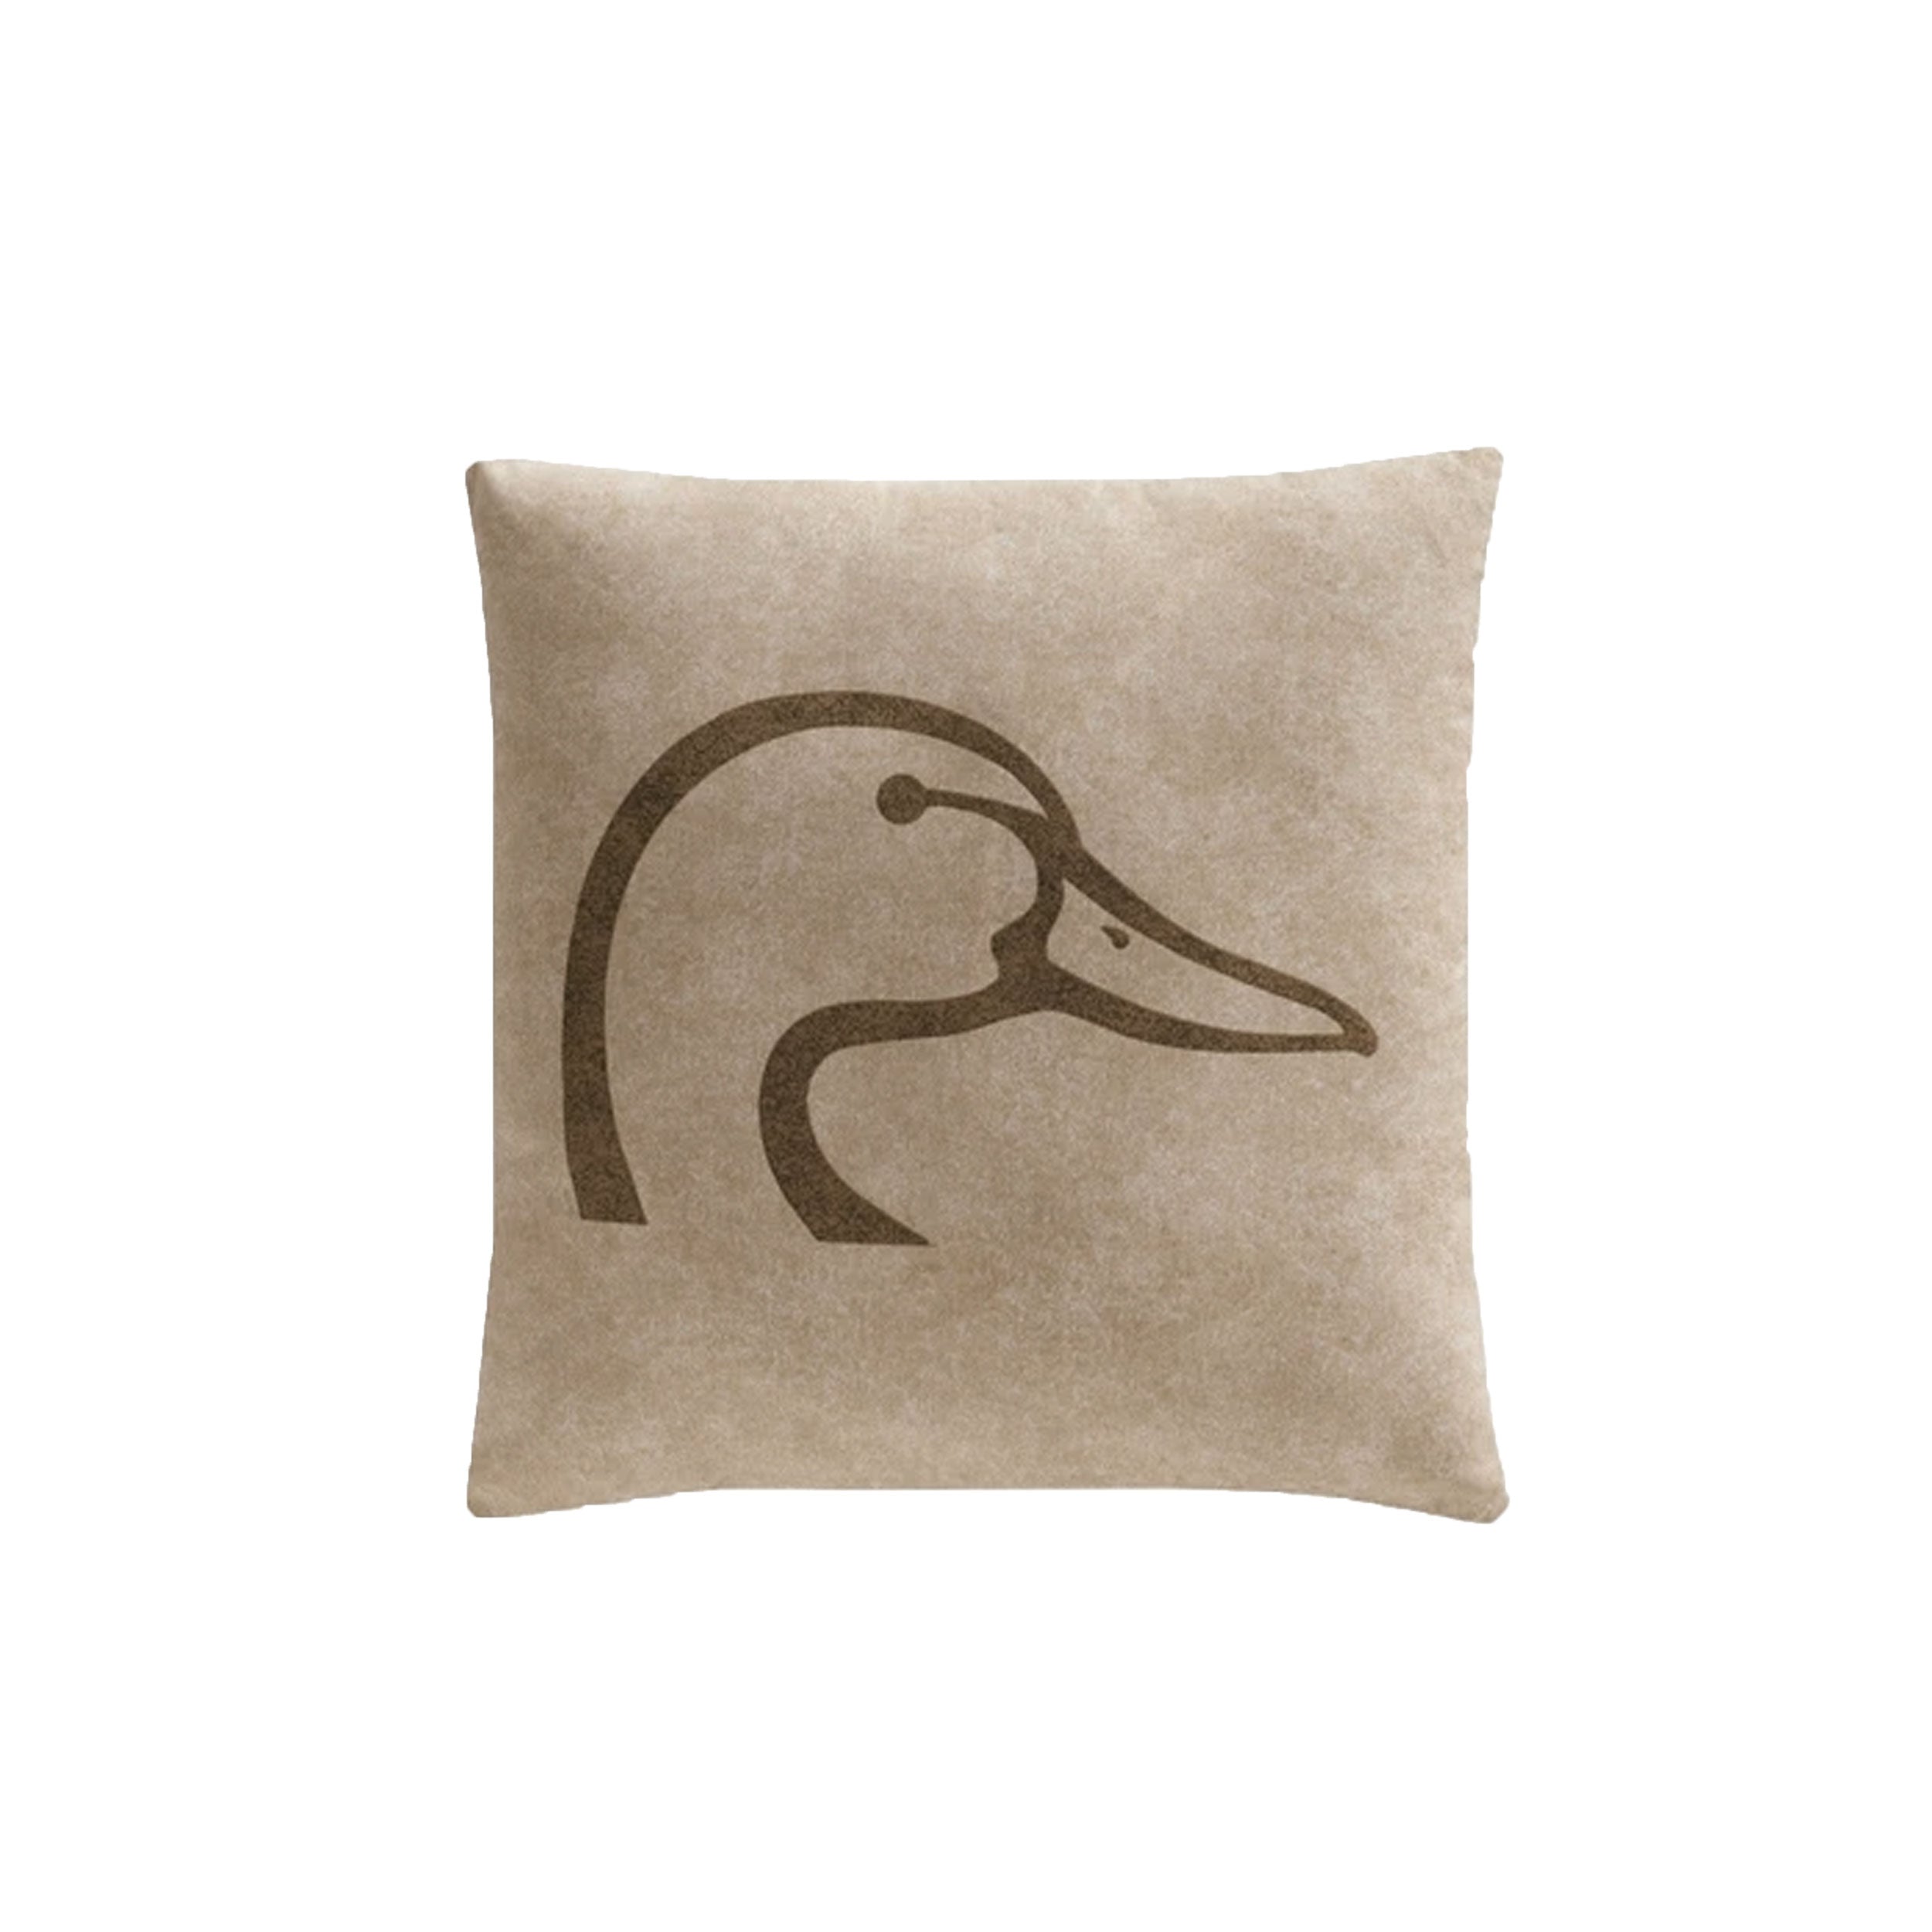 Ducks Unlimited Square Pillow Tan